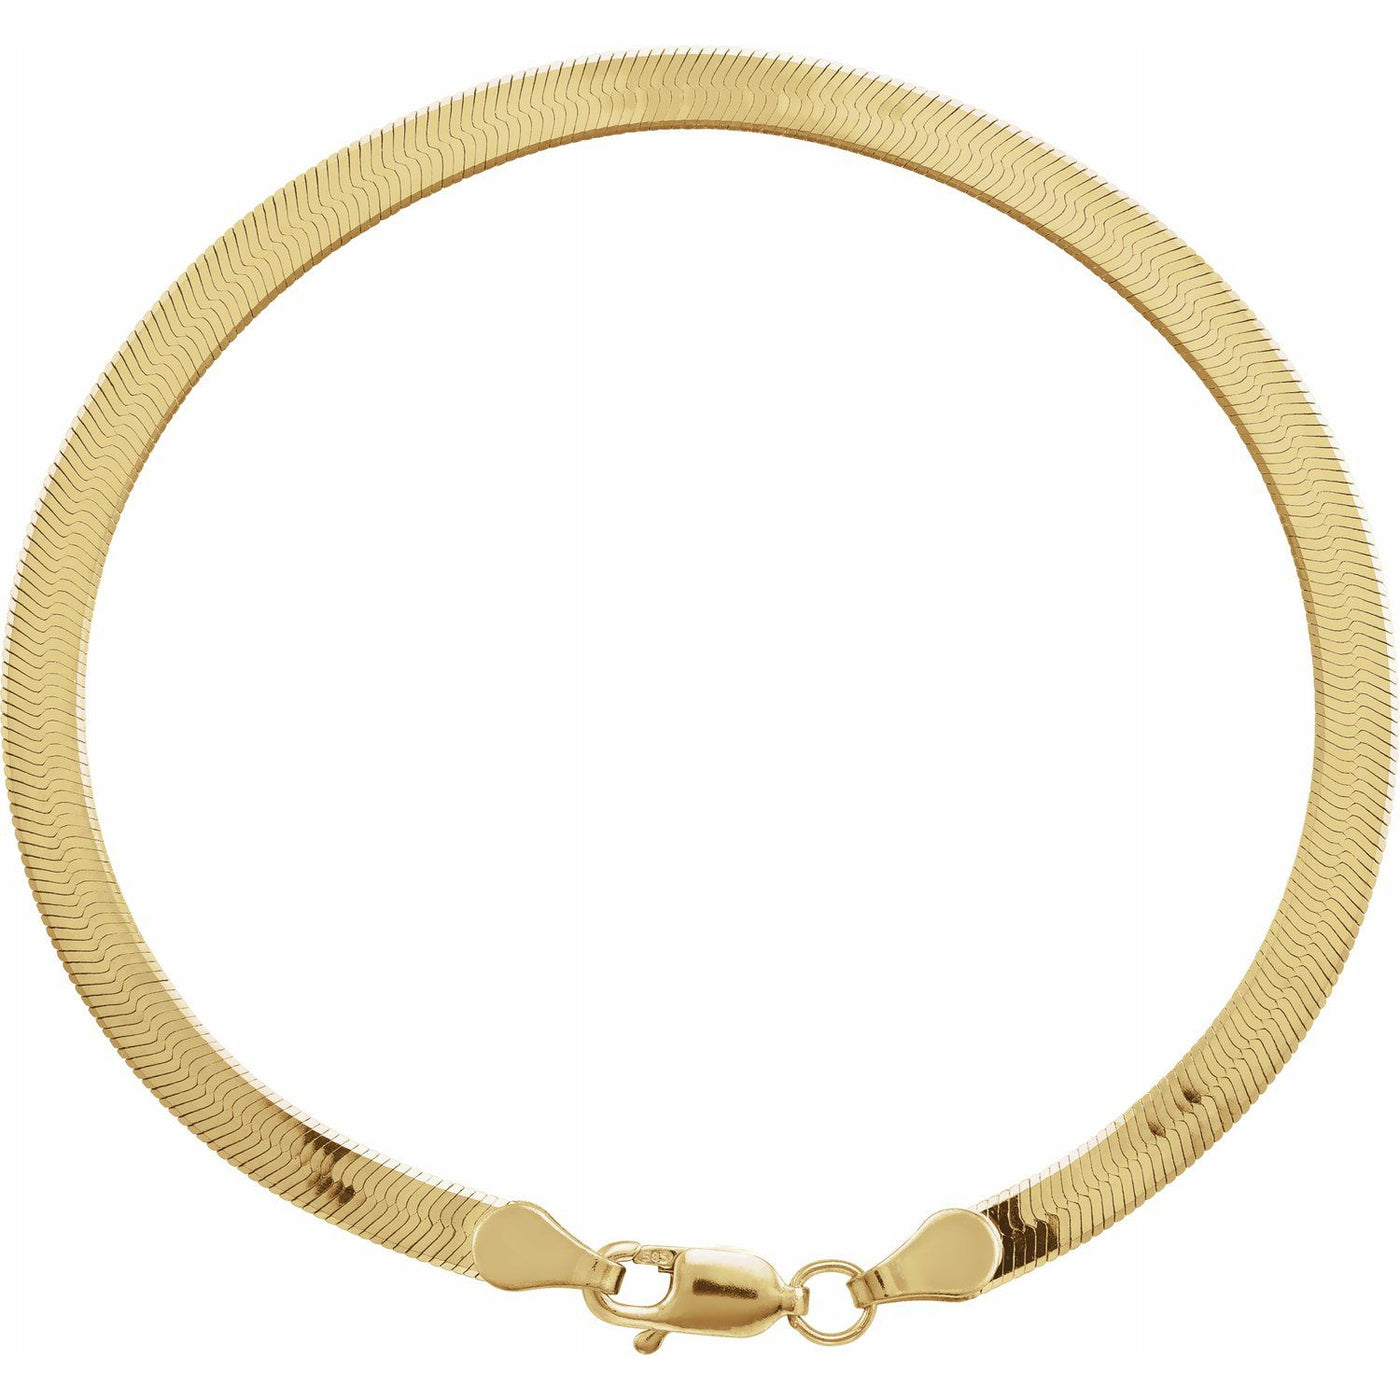 14k Gold 3.8 mm Solid Flexible Herringbone Chain Bracelet 7"